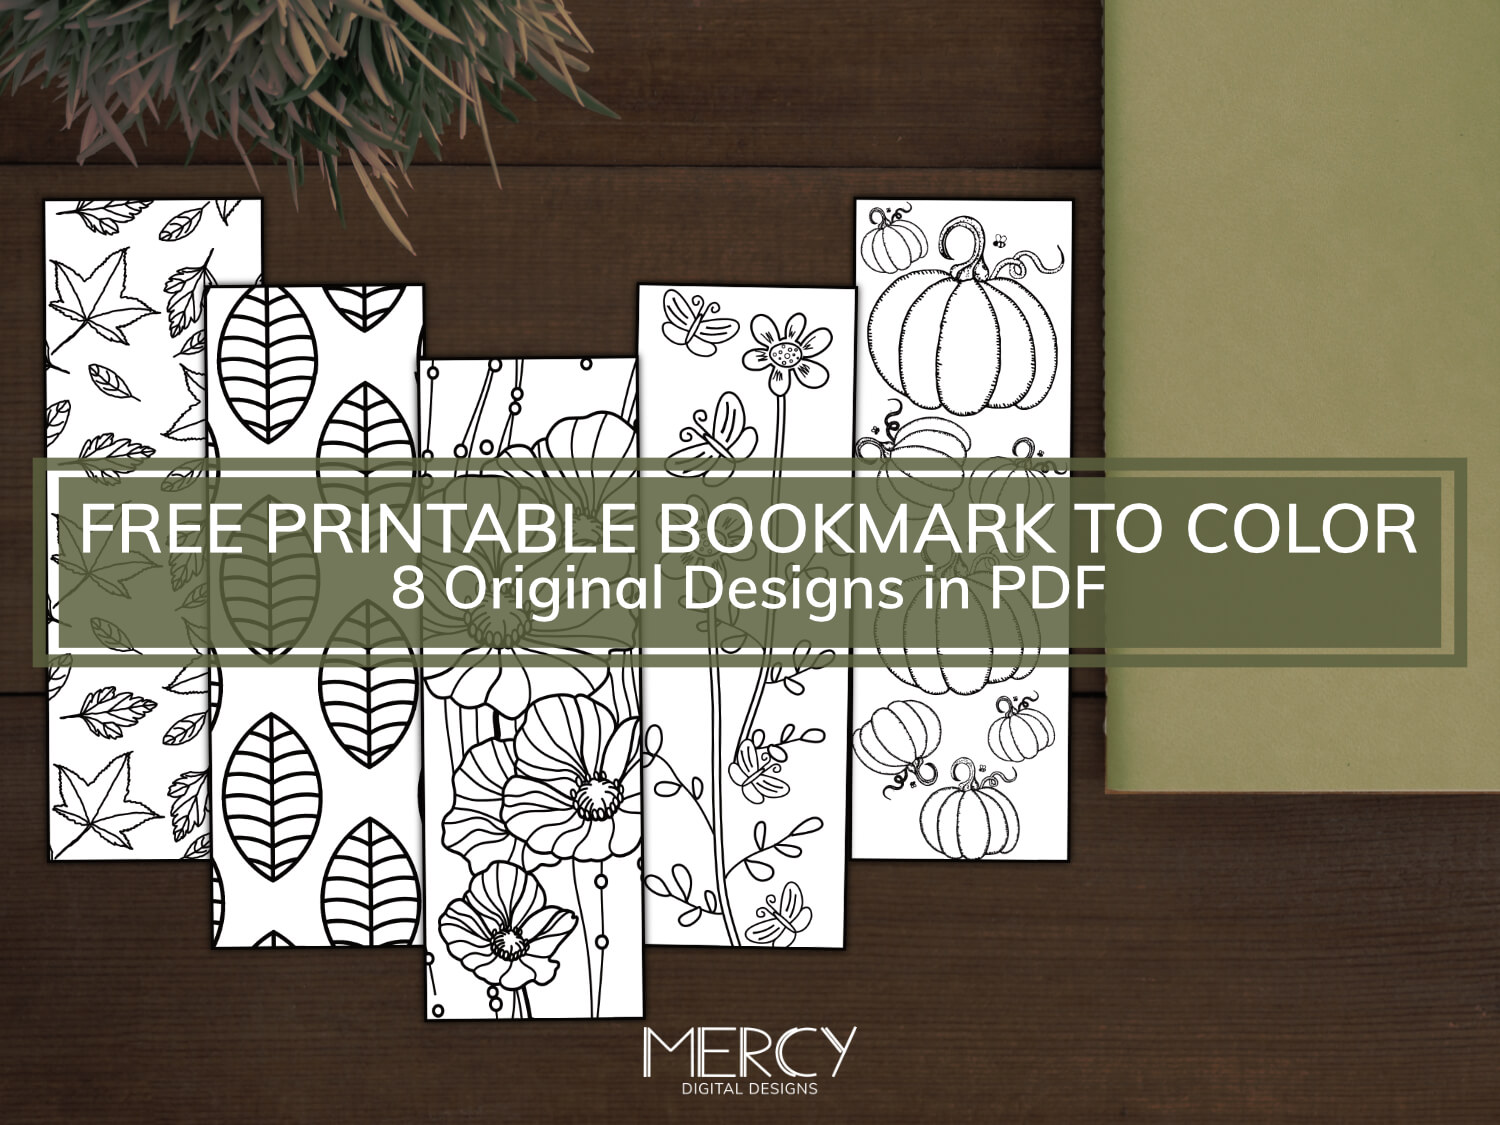 Free Printable Bookmark to Color: 8 Original Designs in PDF